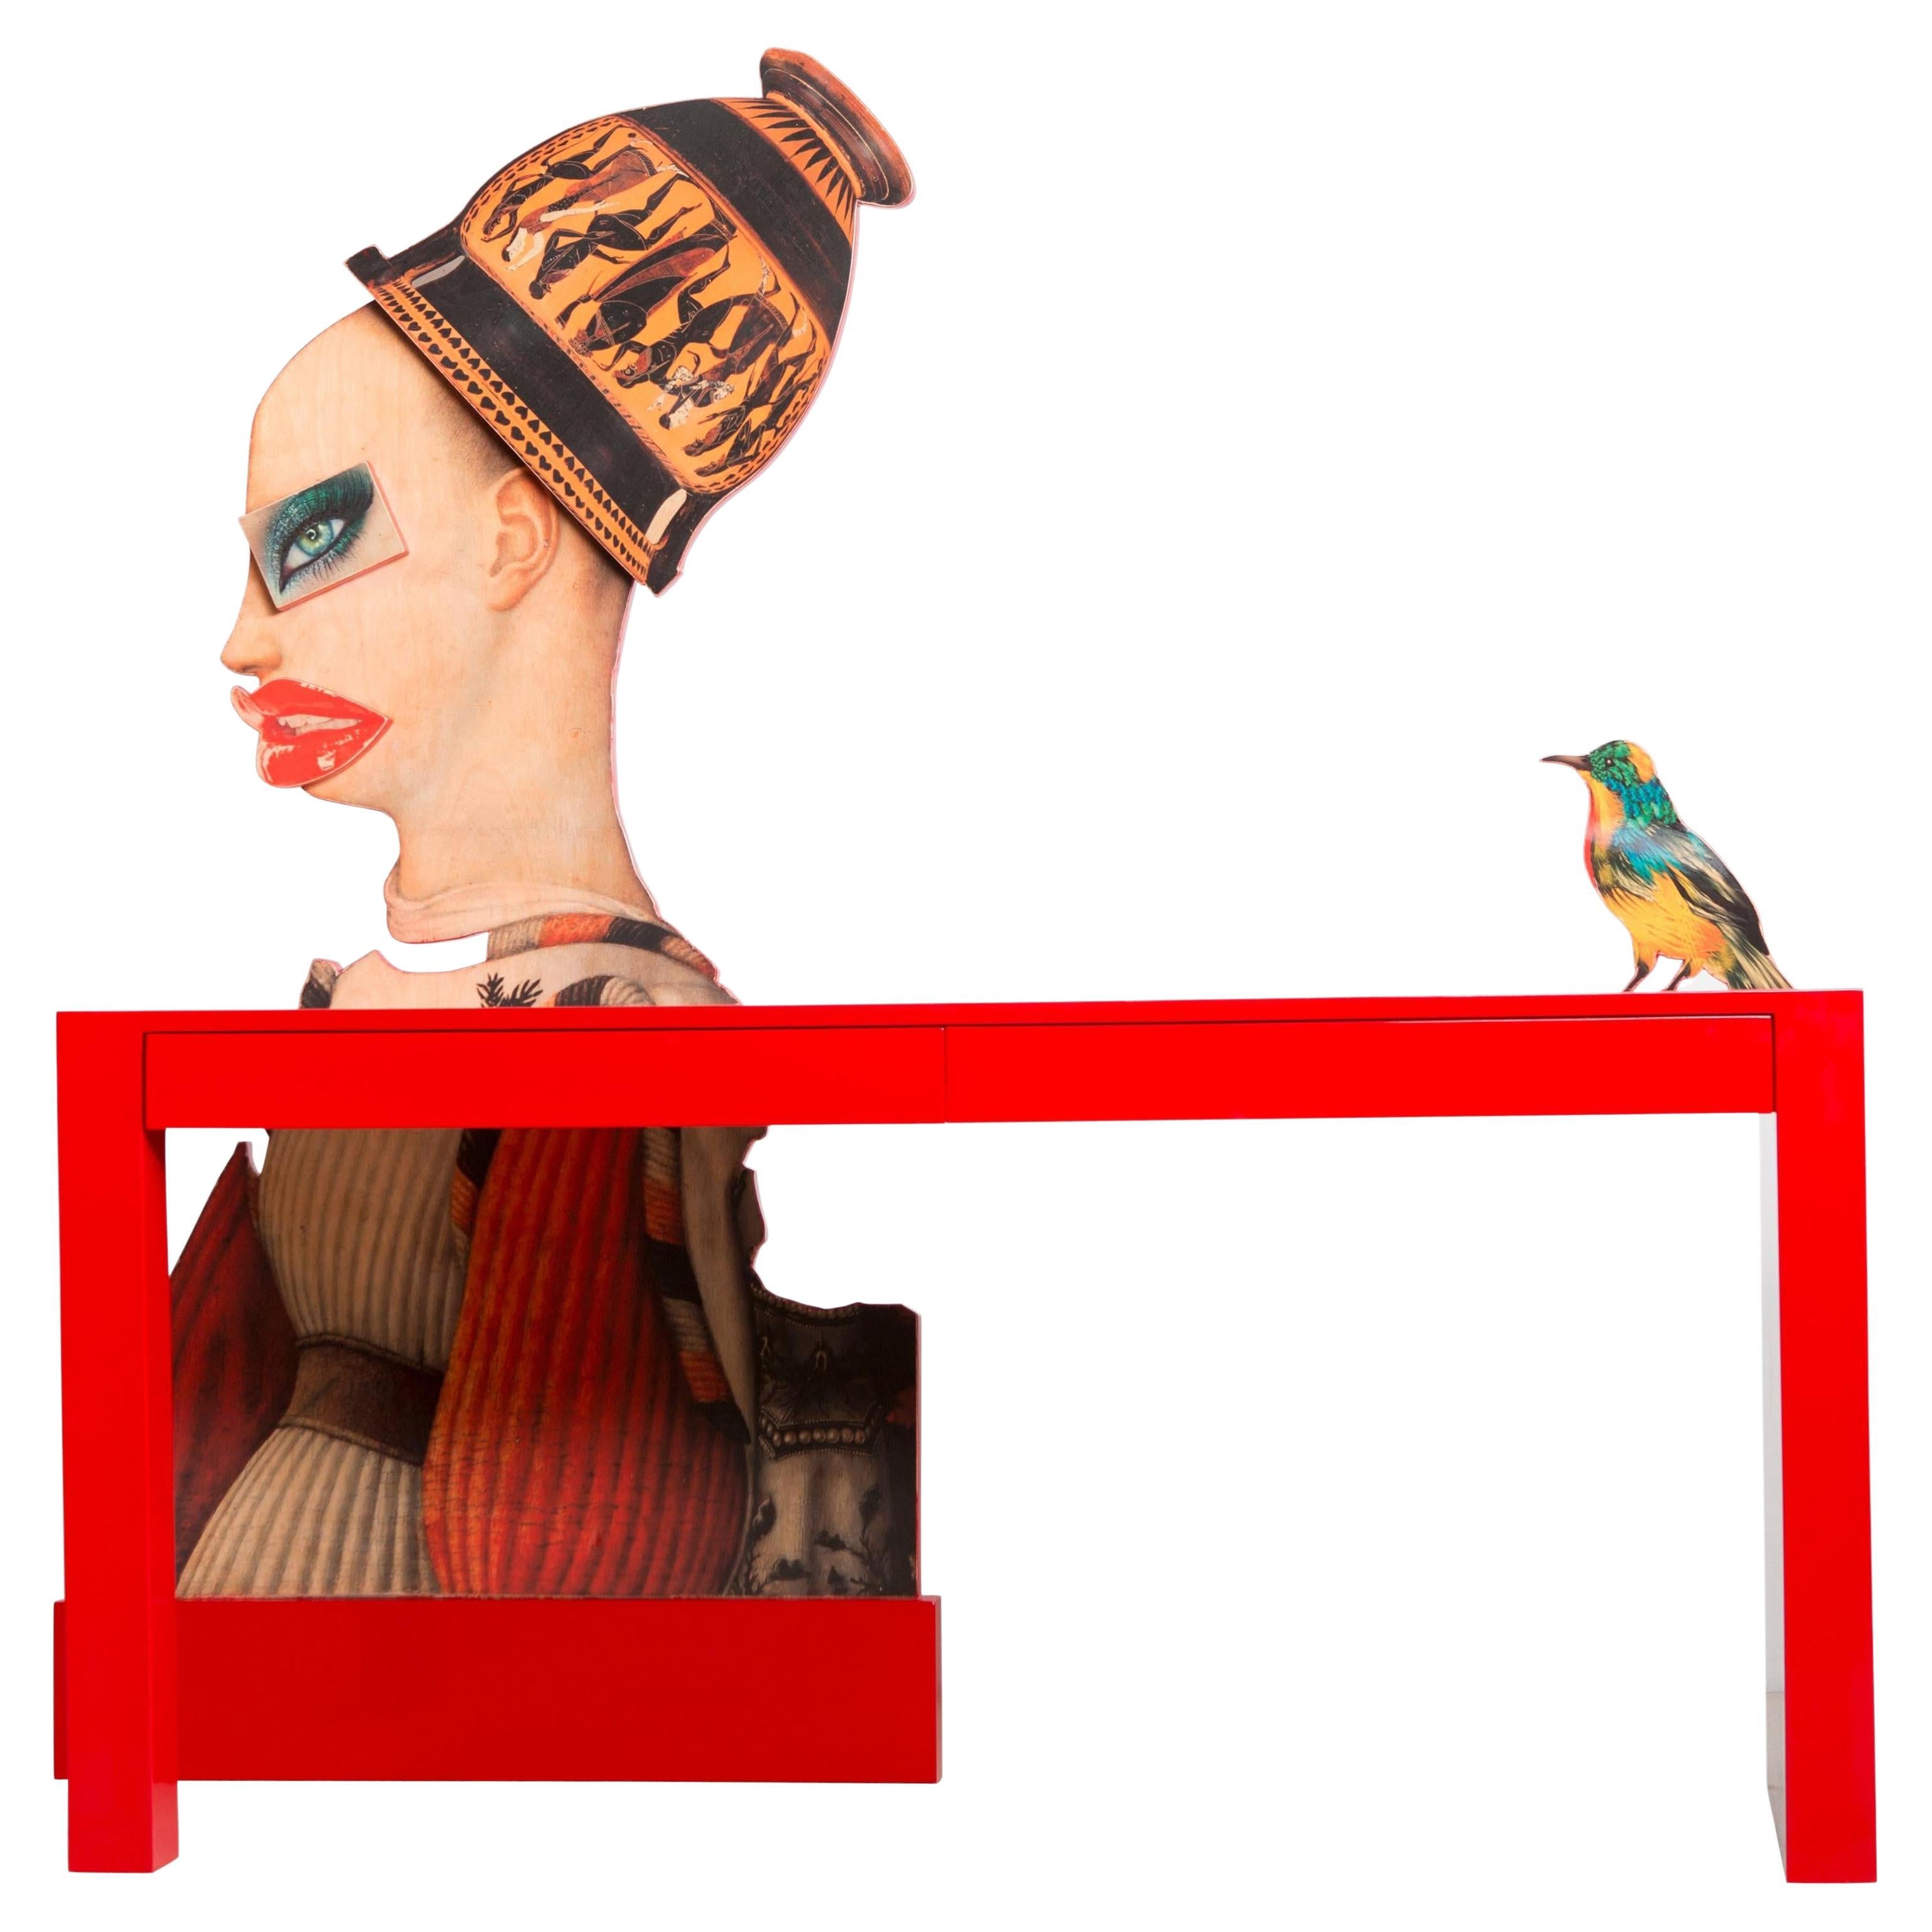 Mattia Biagi, "A Little Bird Told Me", Desk